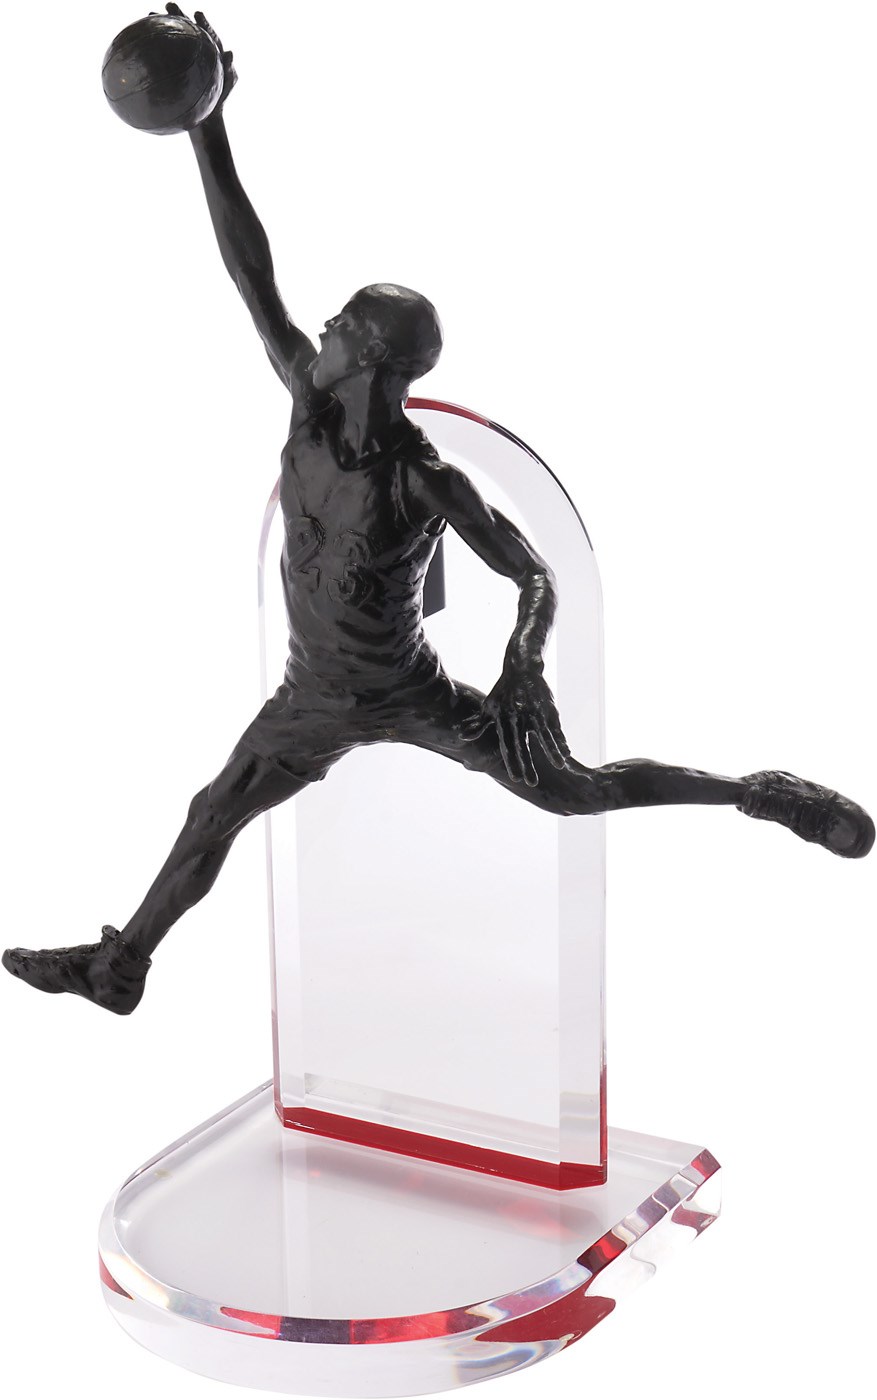 - Michael Jordan Limited Edition Bronze by Steve Landis (1/12)